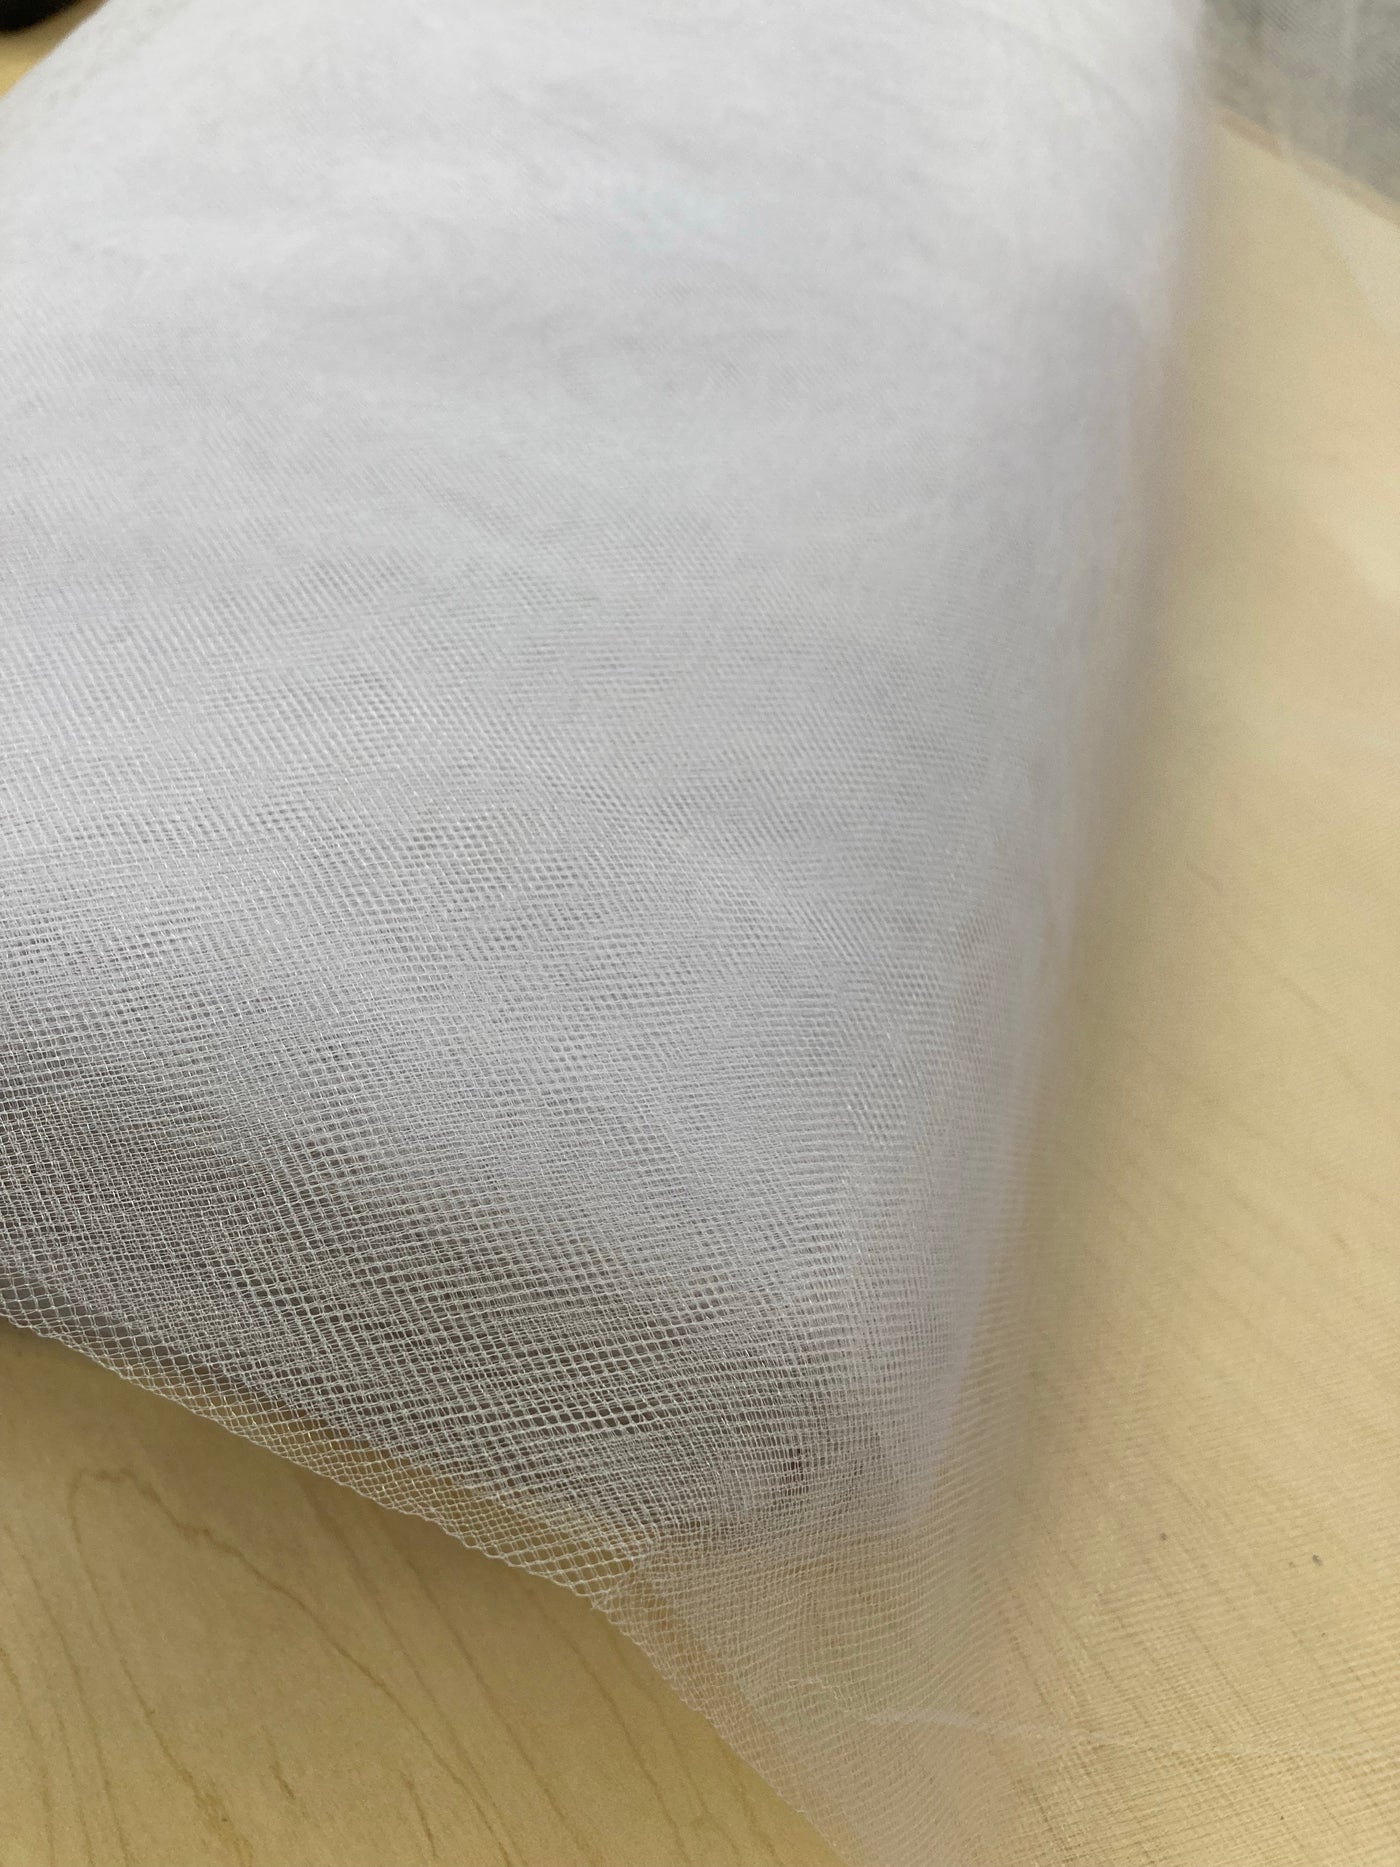 Illusion Tulle/Net Bridal Veil Mesh Fabric 108